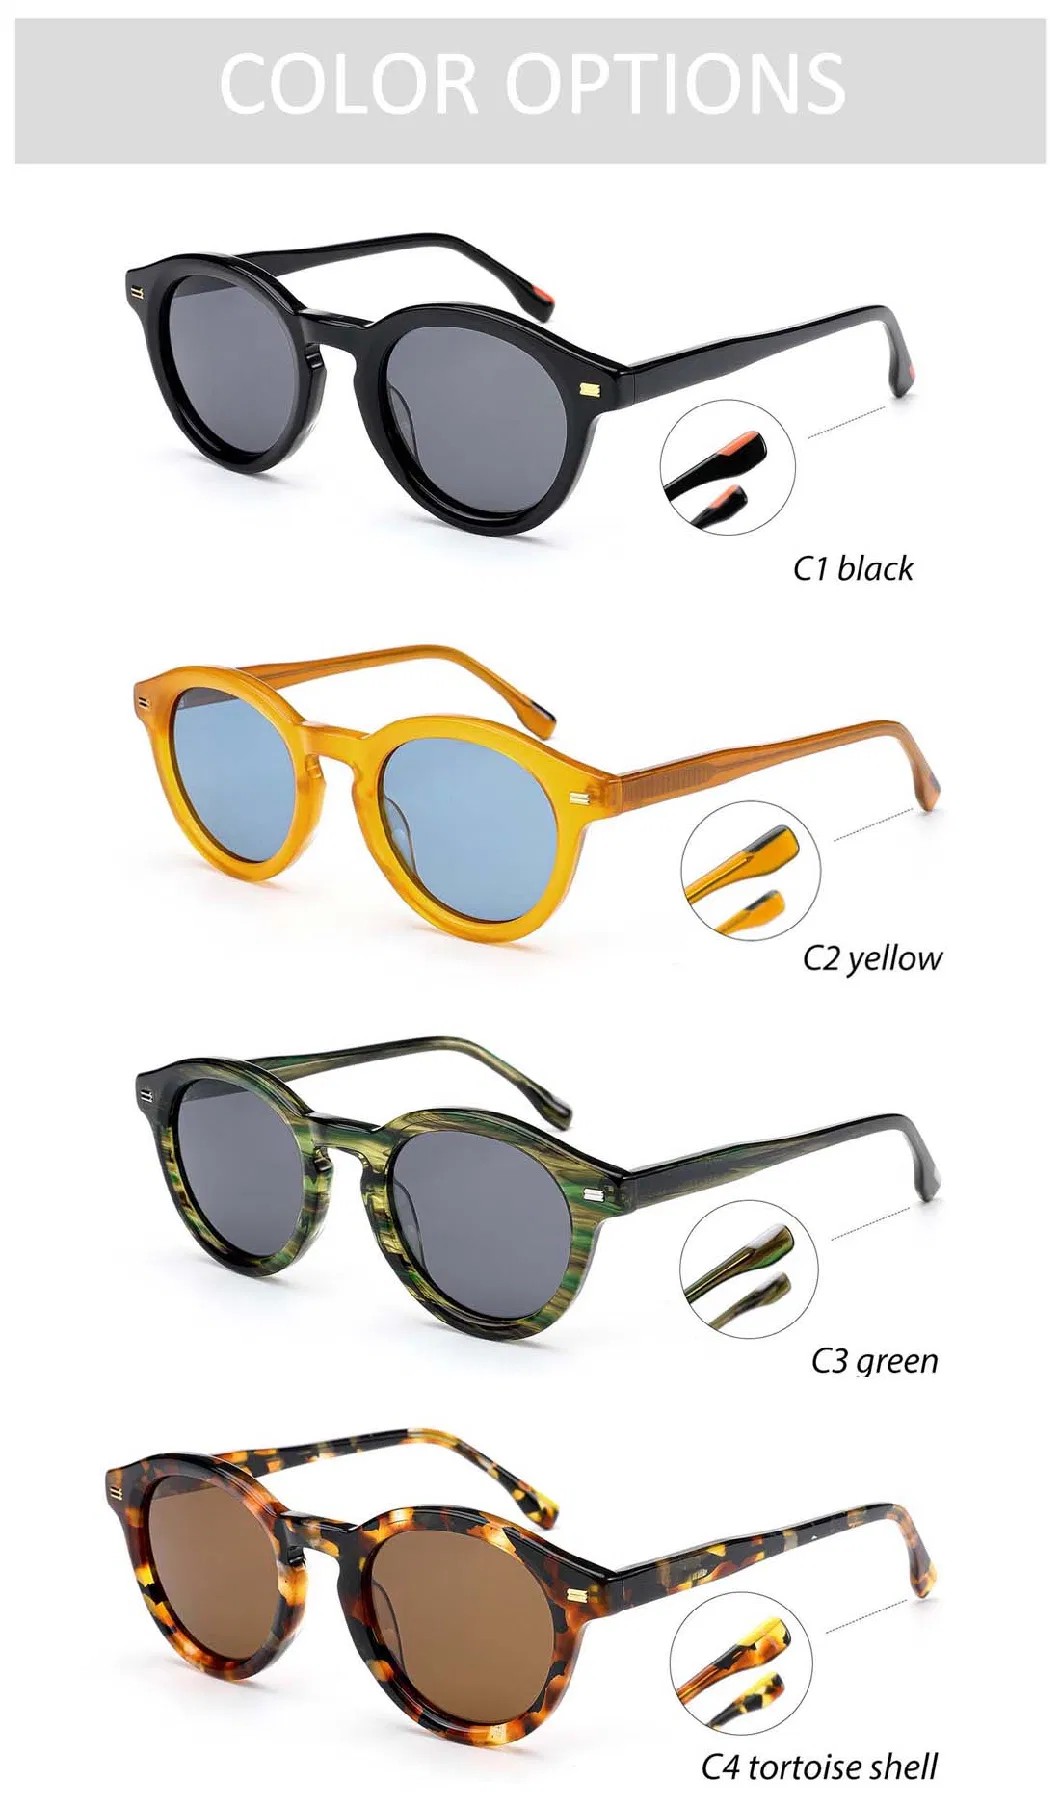 Gd Factory Hot Sale Sunglasses Small Round Fashion Sunglasses Men Women Acetate Sunglass Tac Lens Popular Sun Glasses